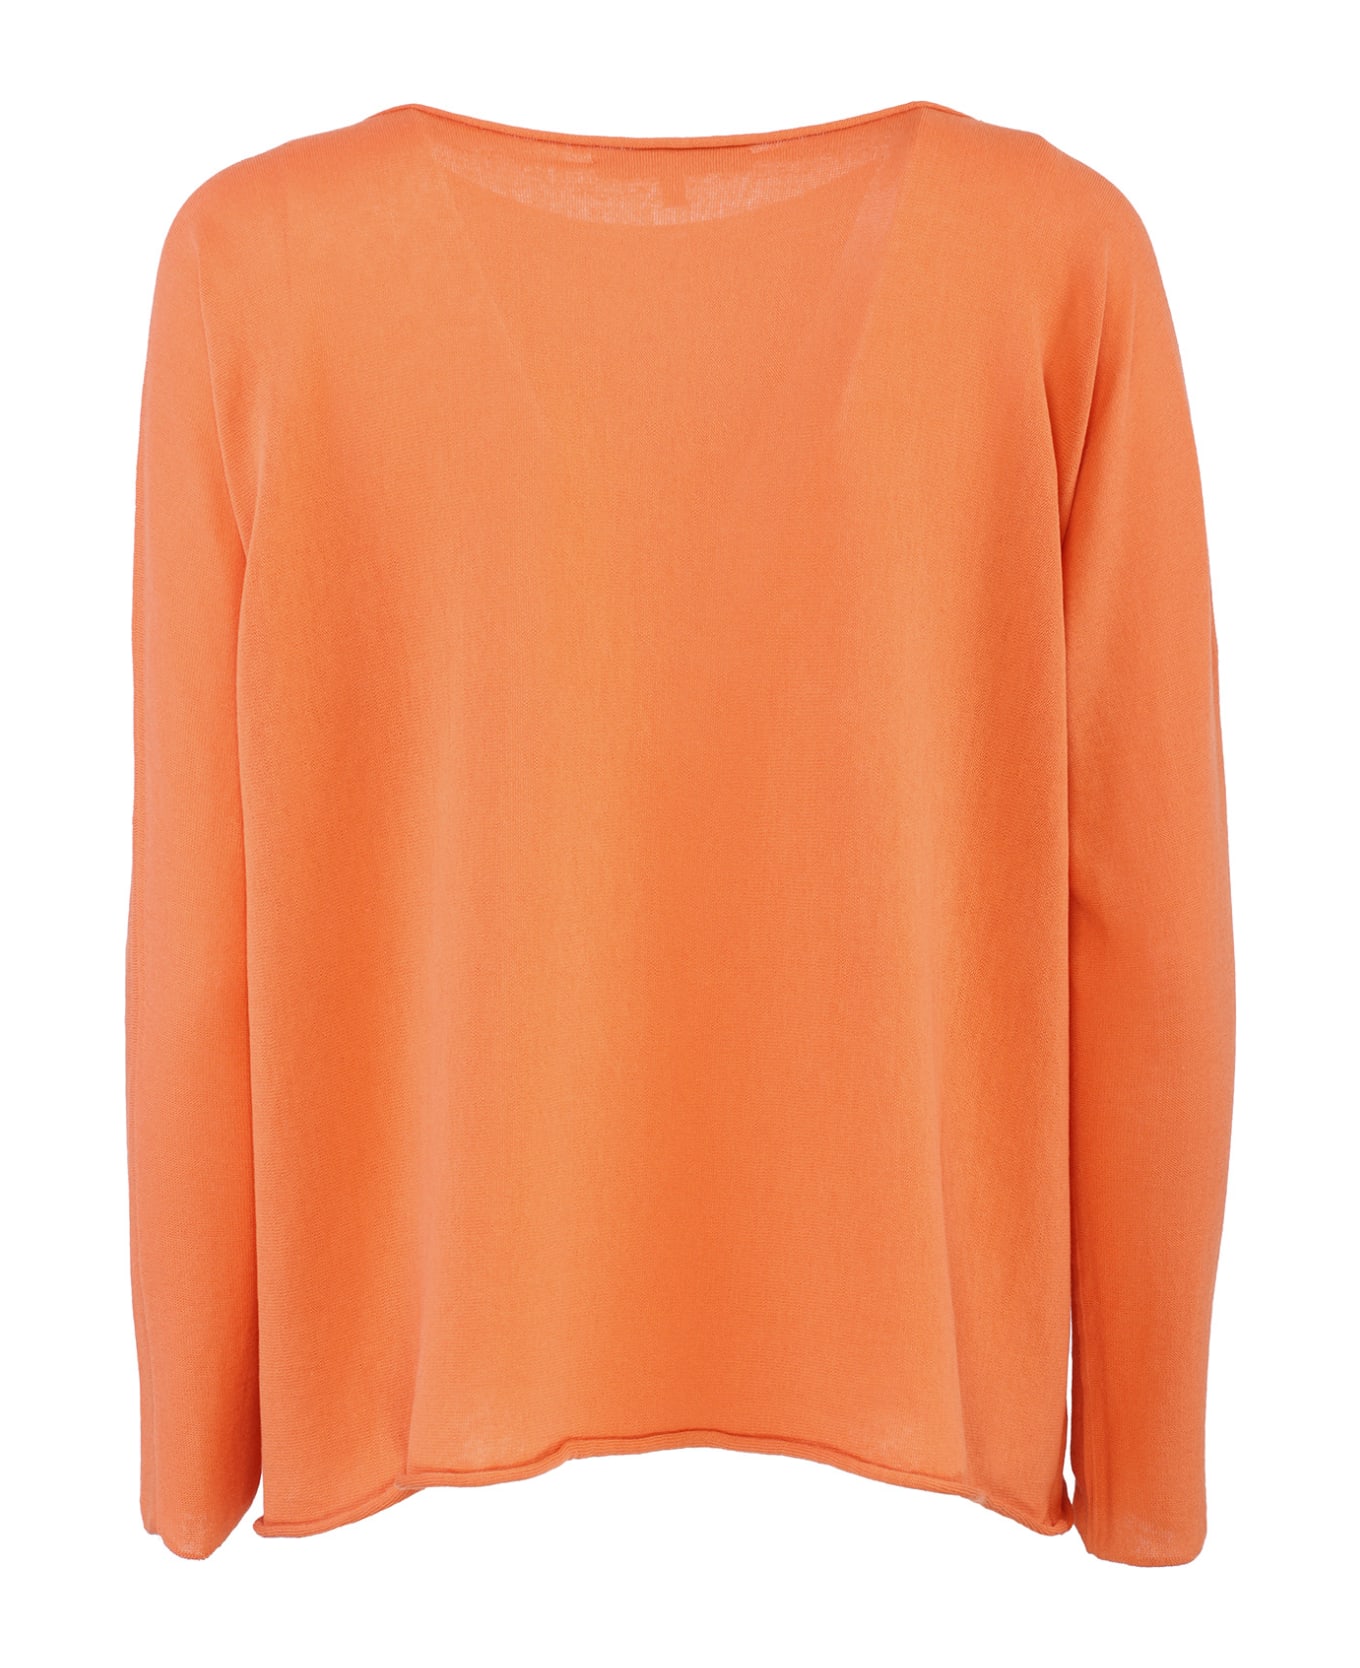 Antonelli Firenze Sweaters Orange - Orange